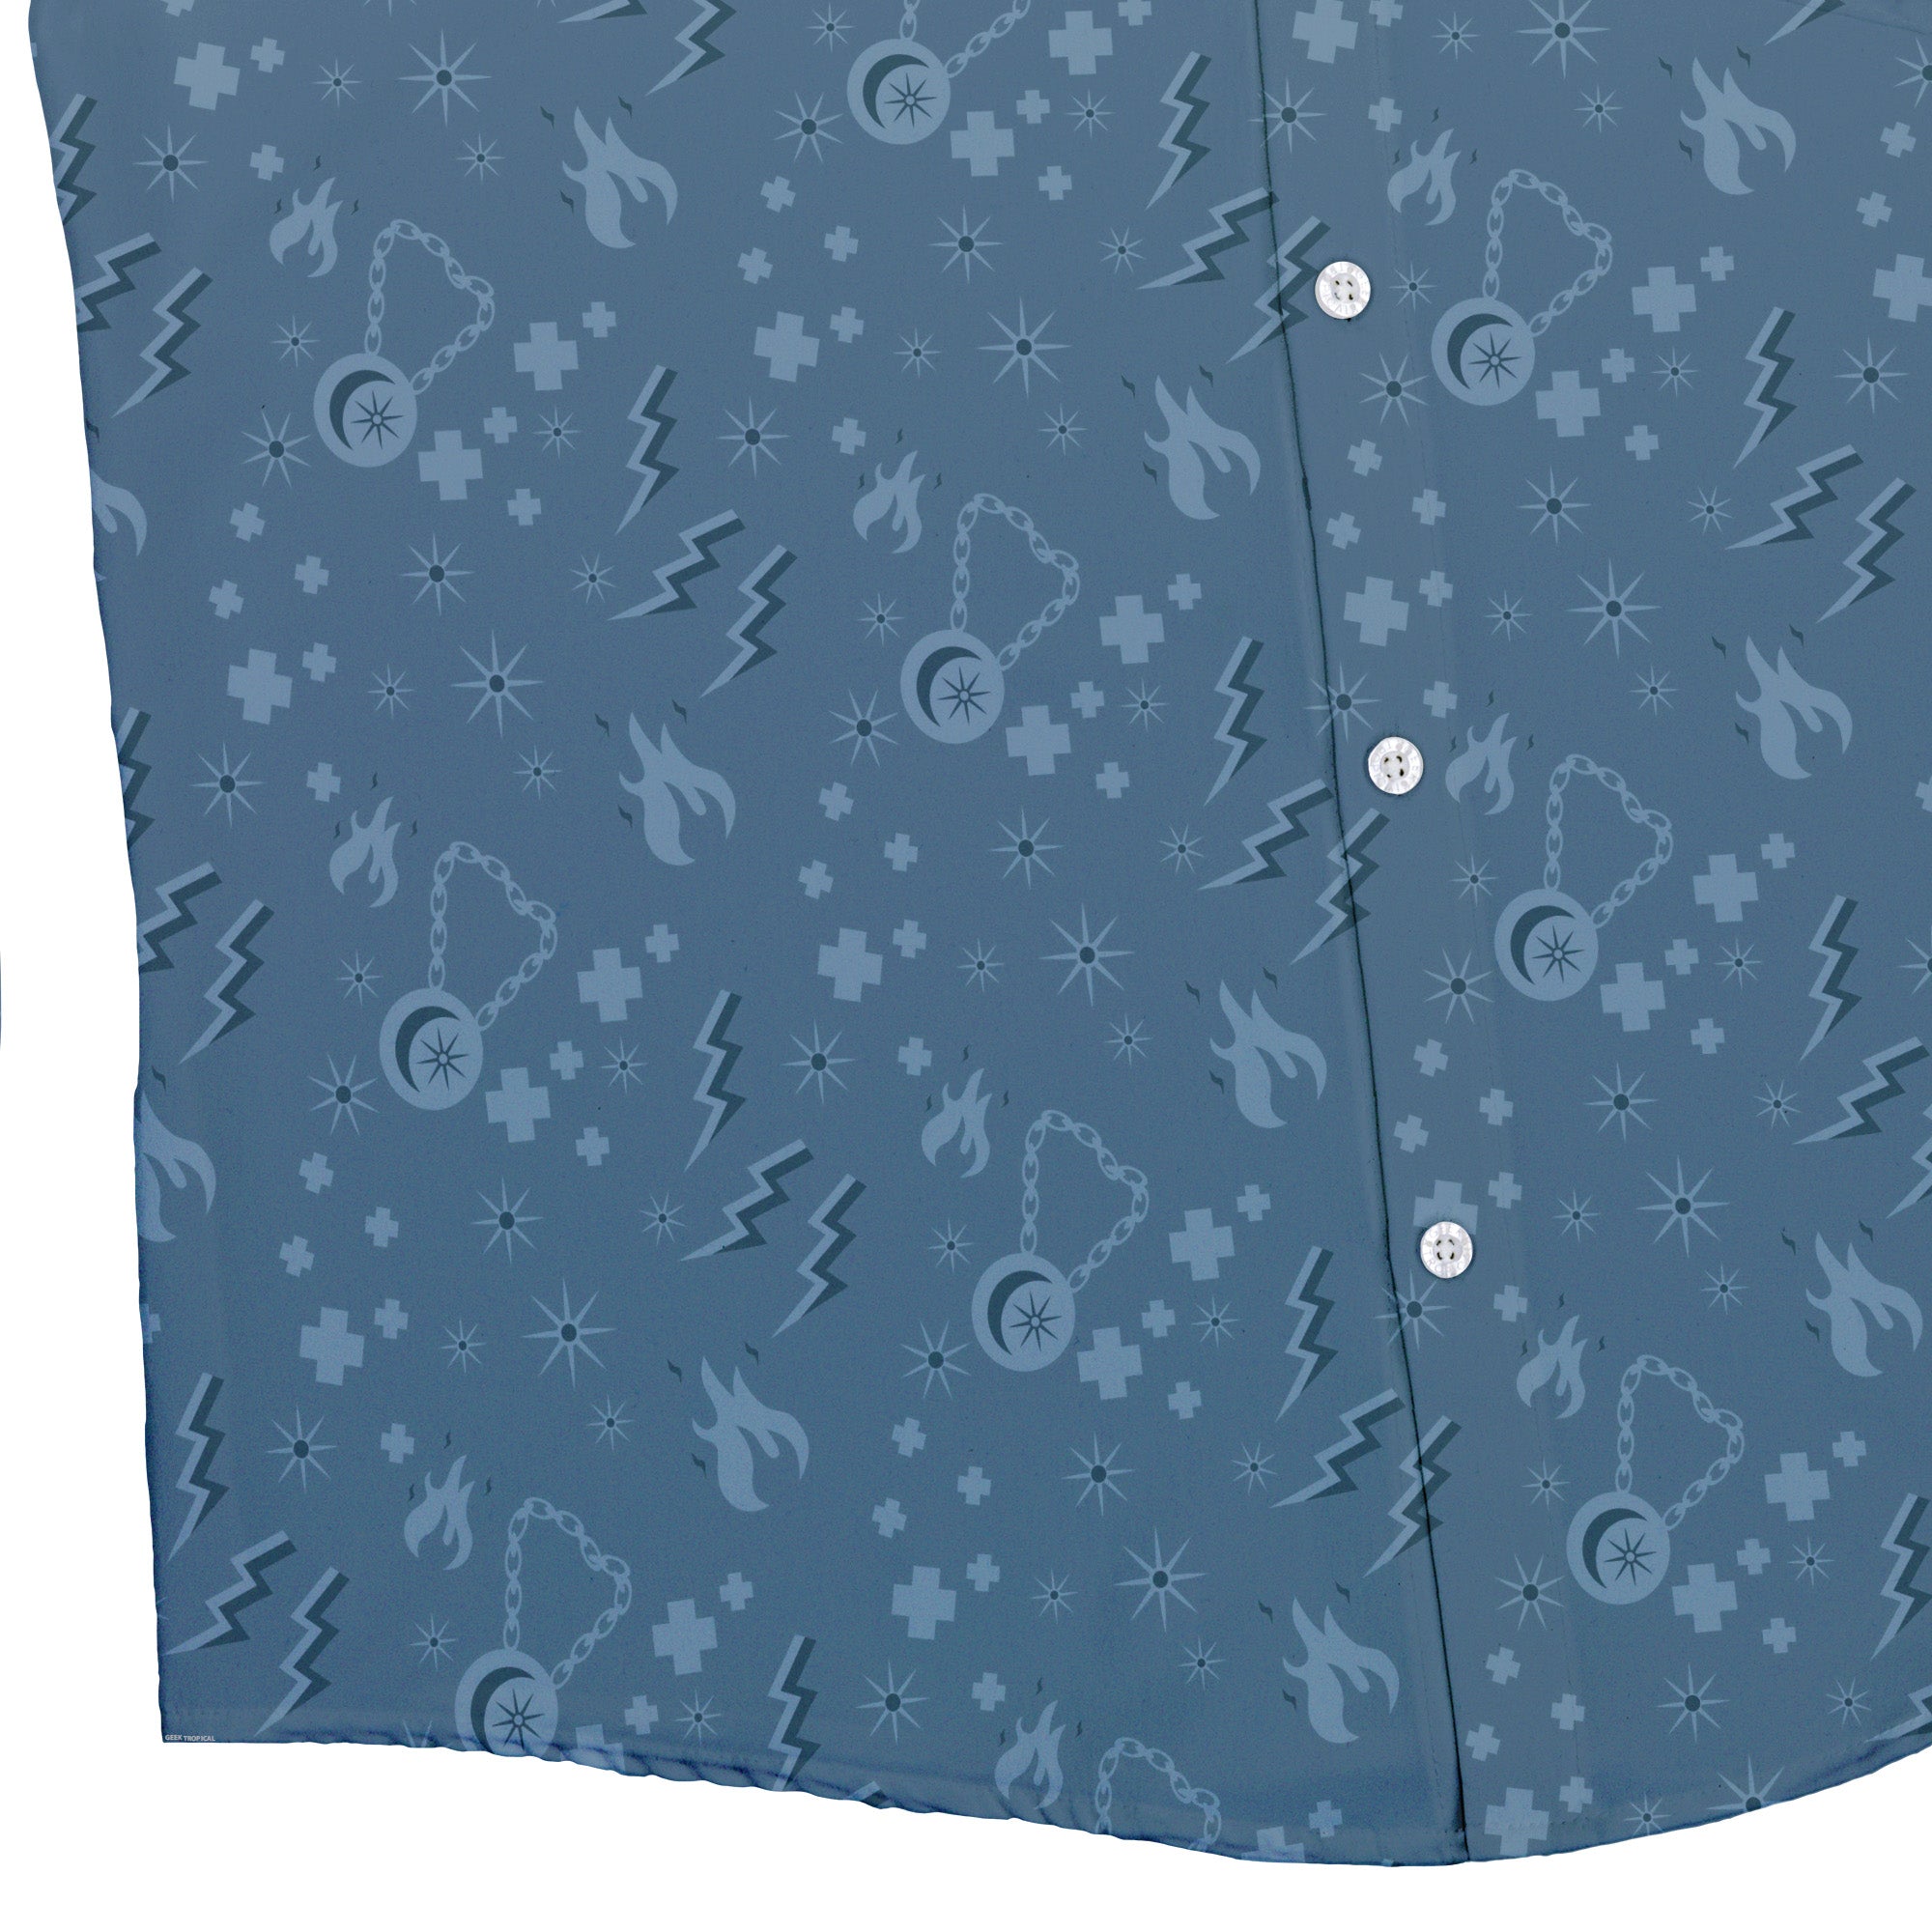 Dnd Cleric Class Button Up Shirt - adult sizing - Design by Heather Davenport - dnd & rpg print